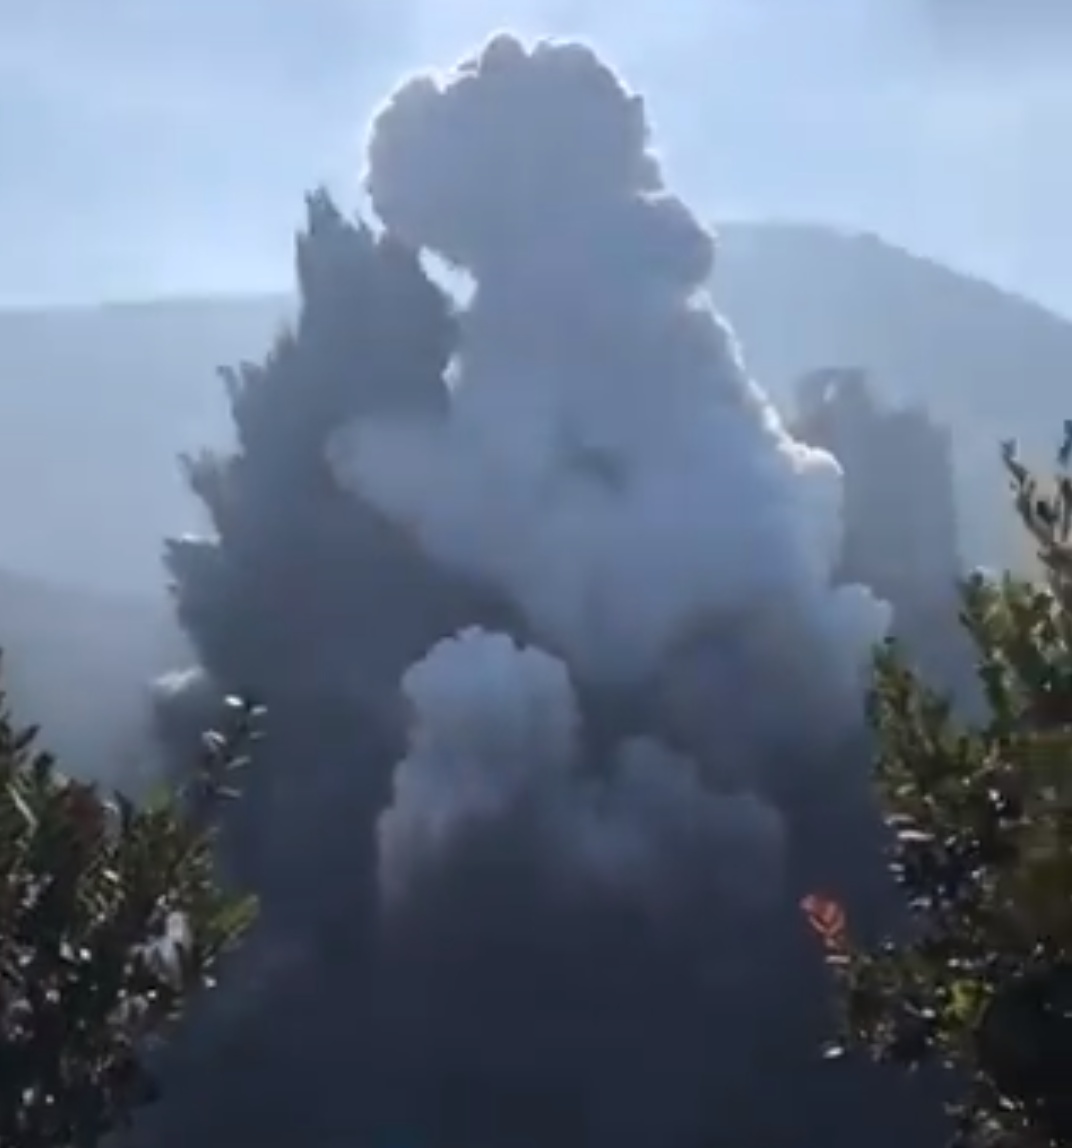 Strong phreatic eruption at Tangkubanparahu, heavy ashfall reported, Indonesia